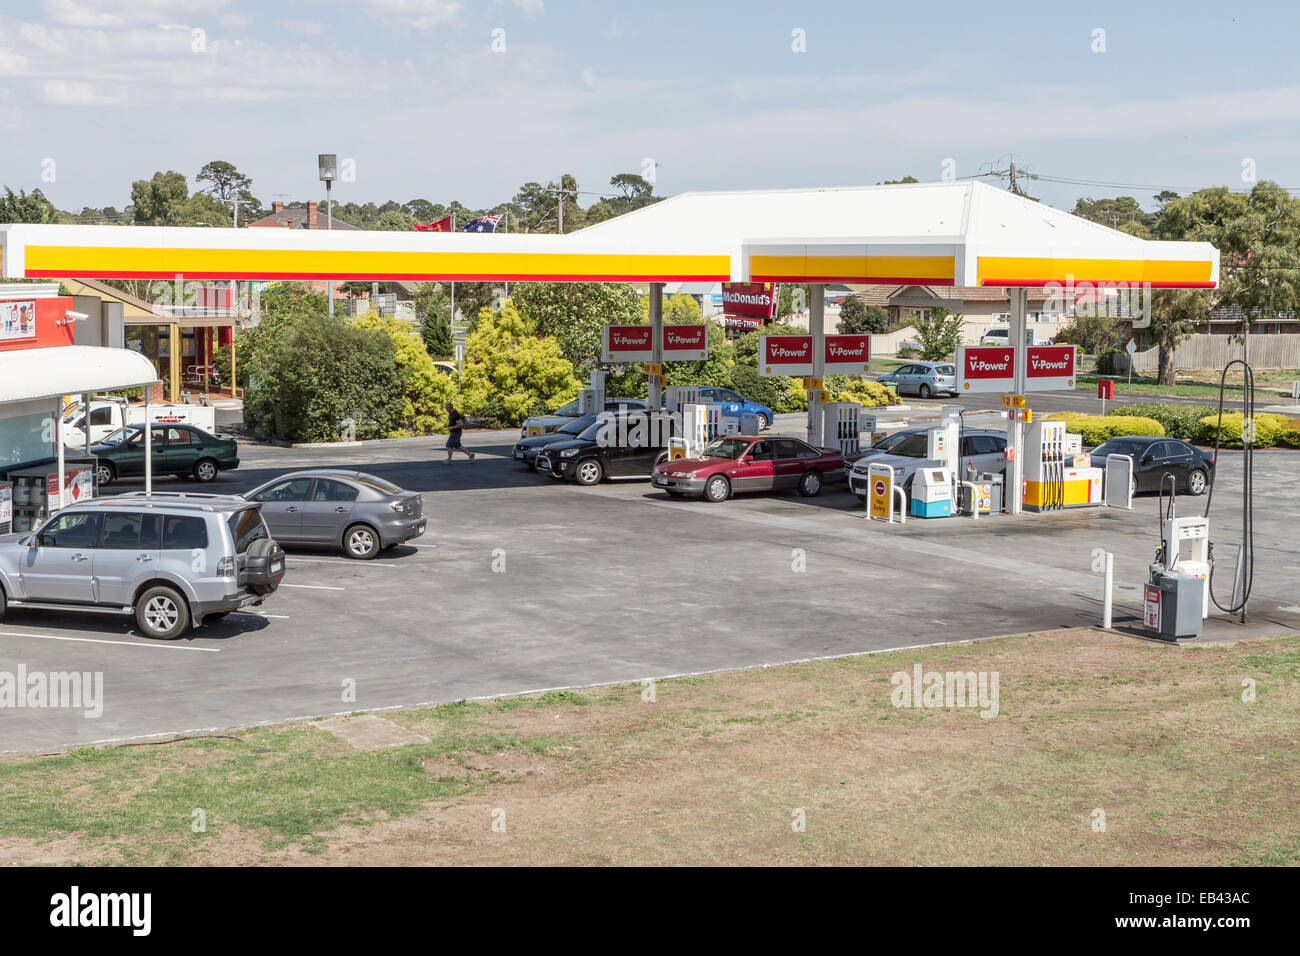 Coles branded Shell petrol station at Sunbury, Victoria, Australia Stock Photo